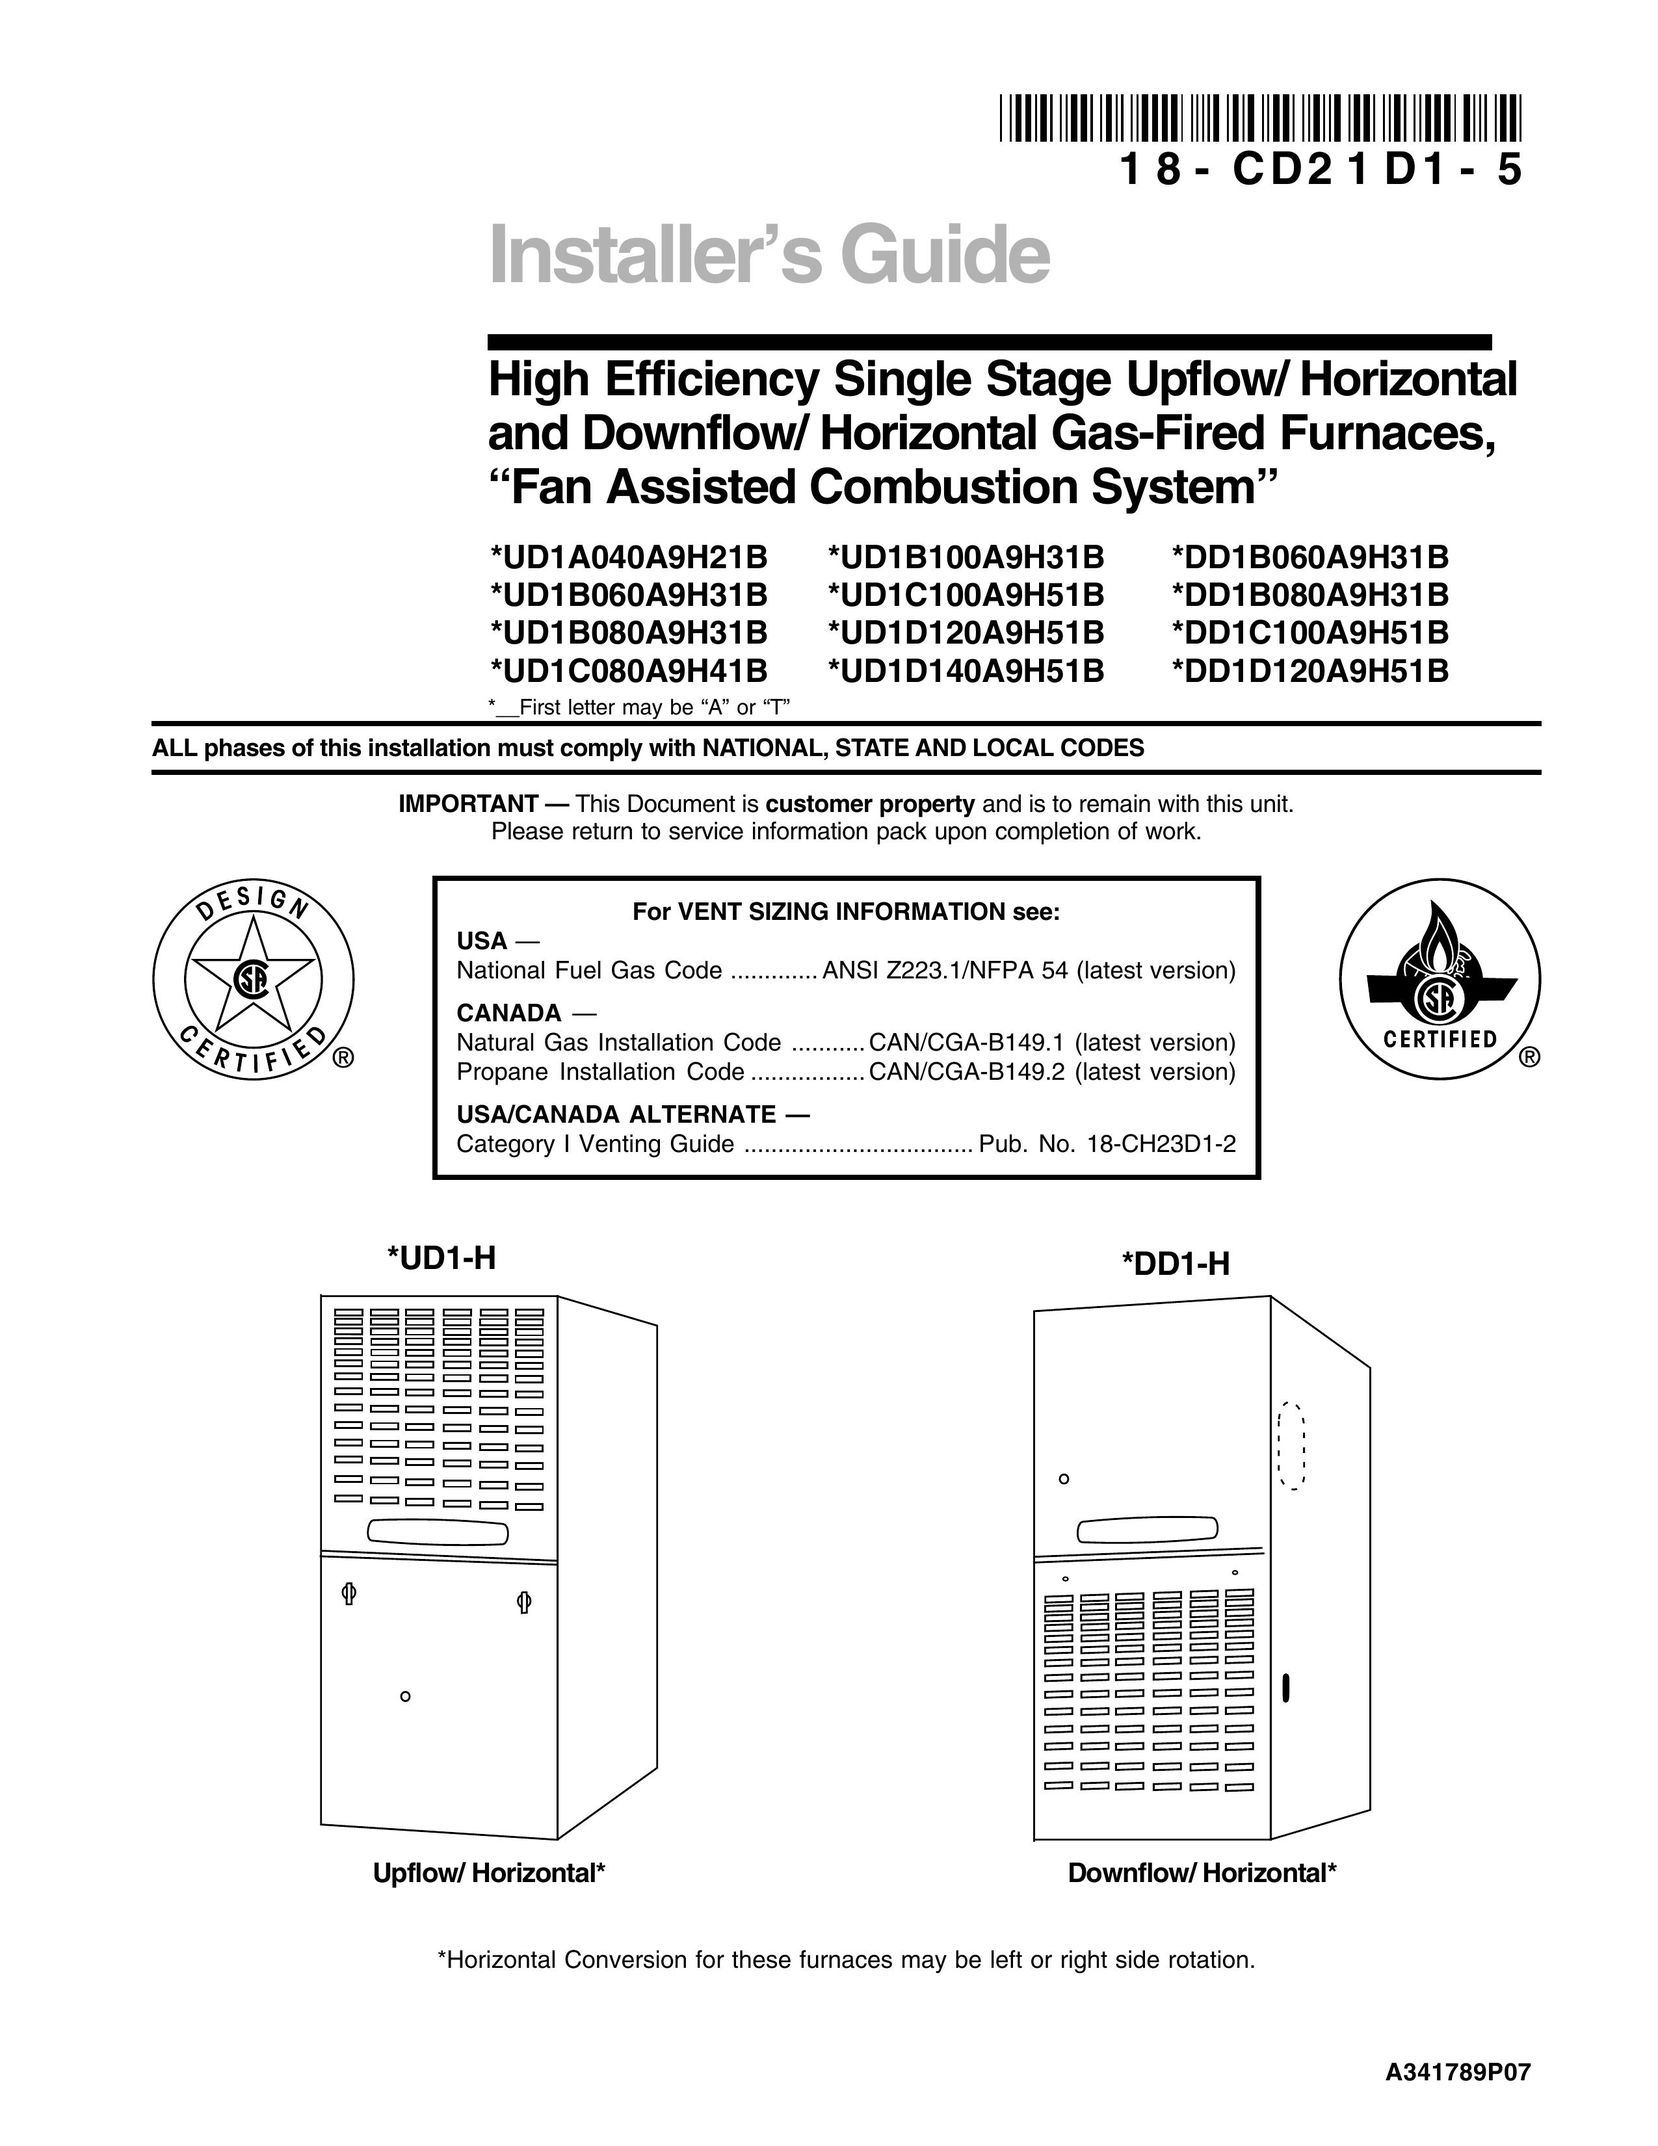 Trane UD1C080A9H41B Furnace User Manual